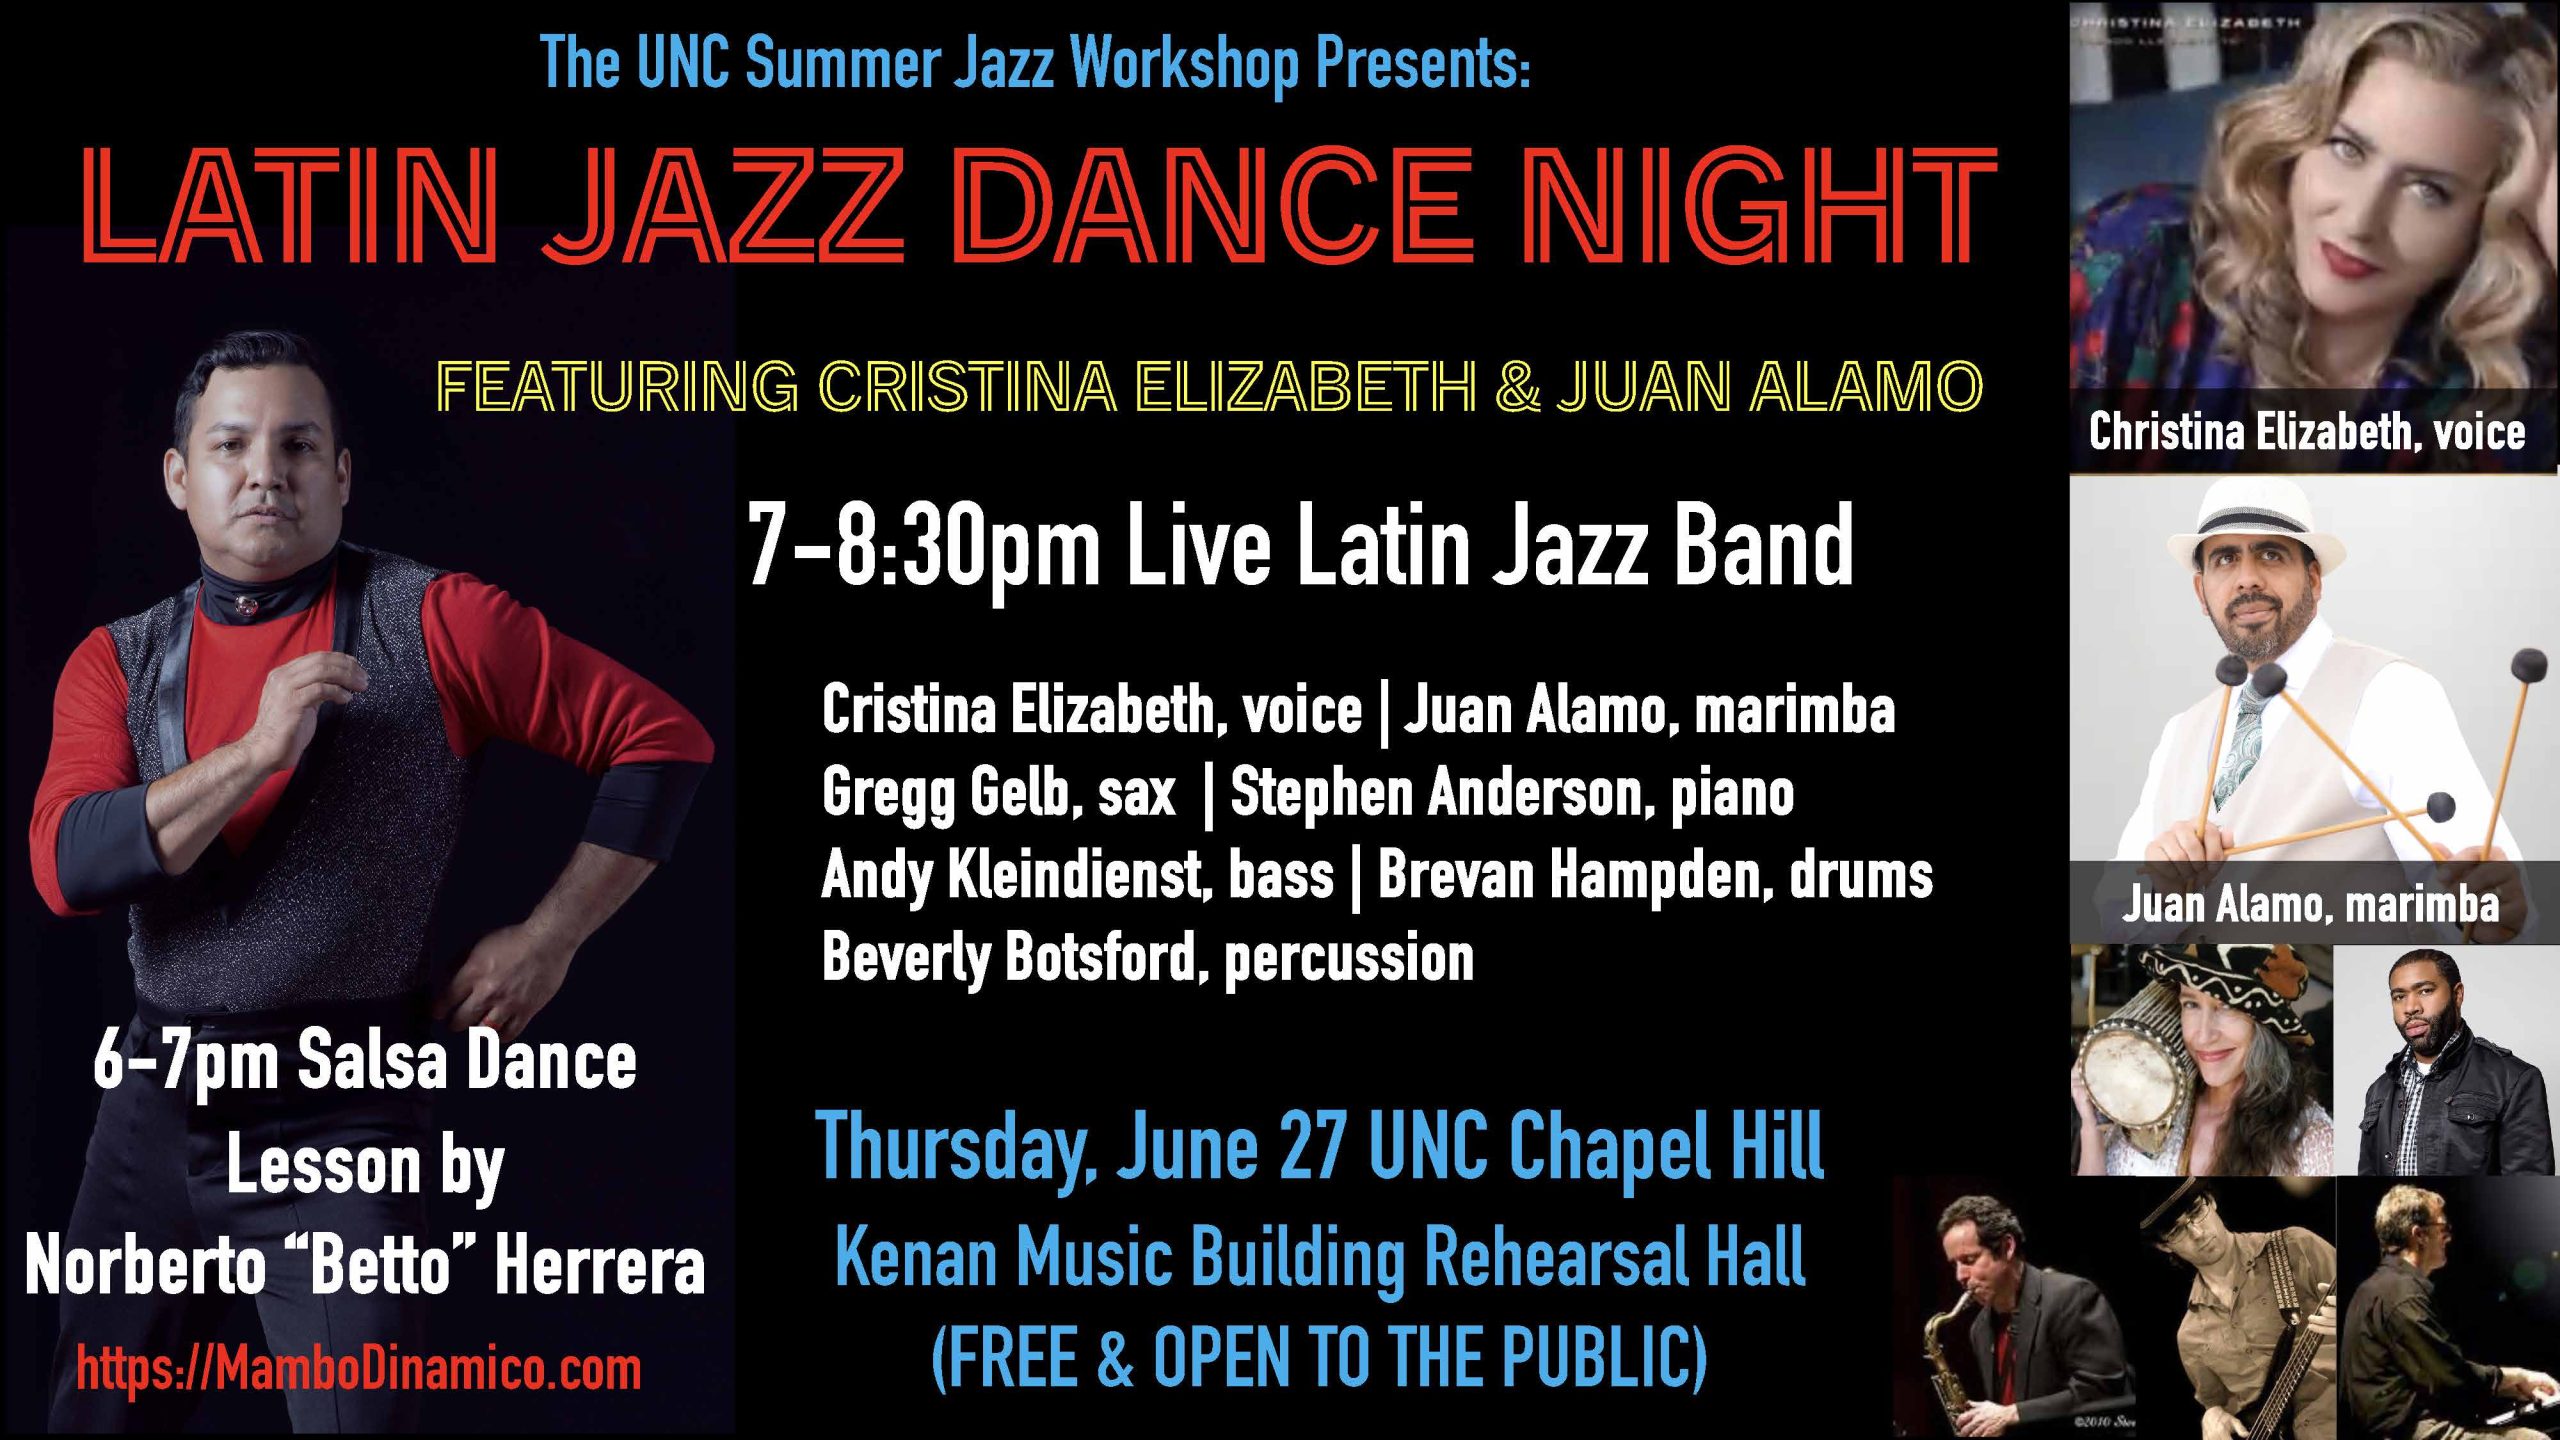 Latin Jazz Dance Night flyer image